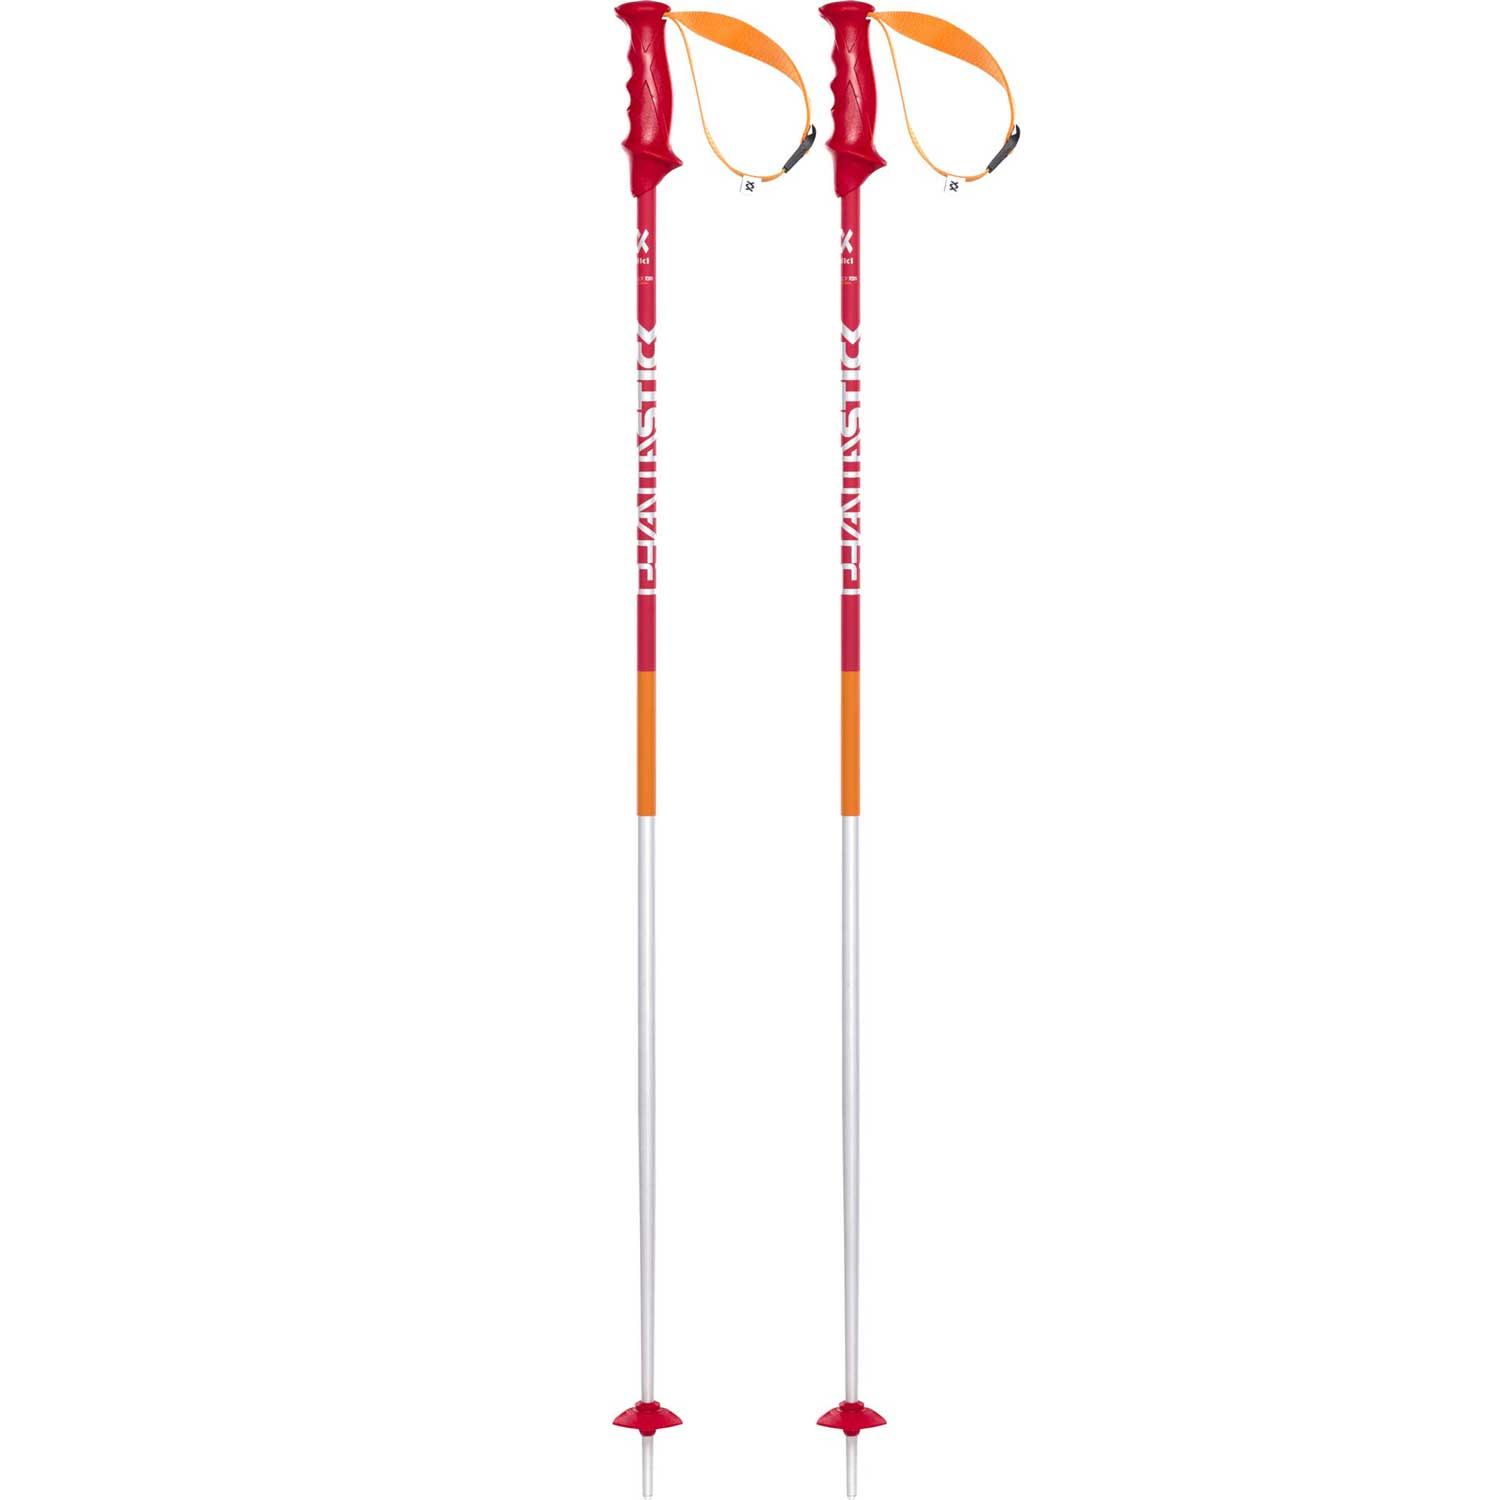 Bâtons ski Phantastick 2 18 mm - Rouge